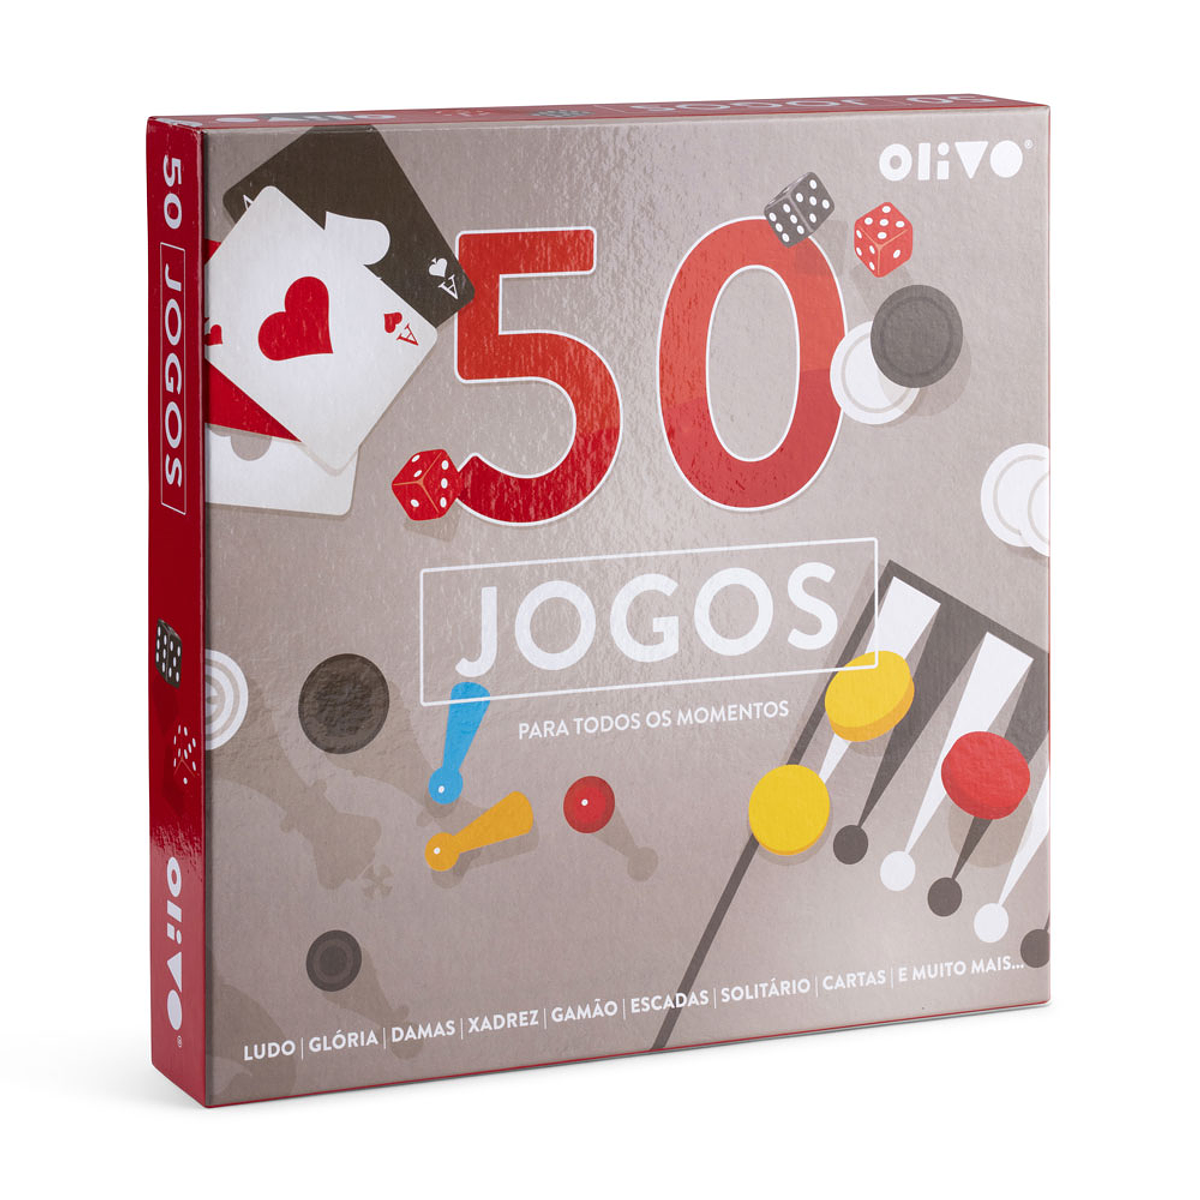 Olivo - 50 Jogos parar Todos os Momentos